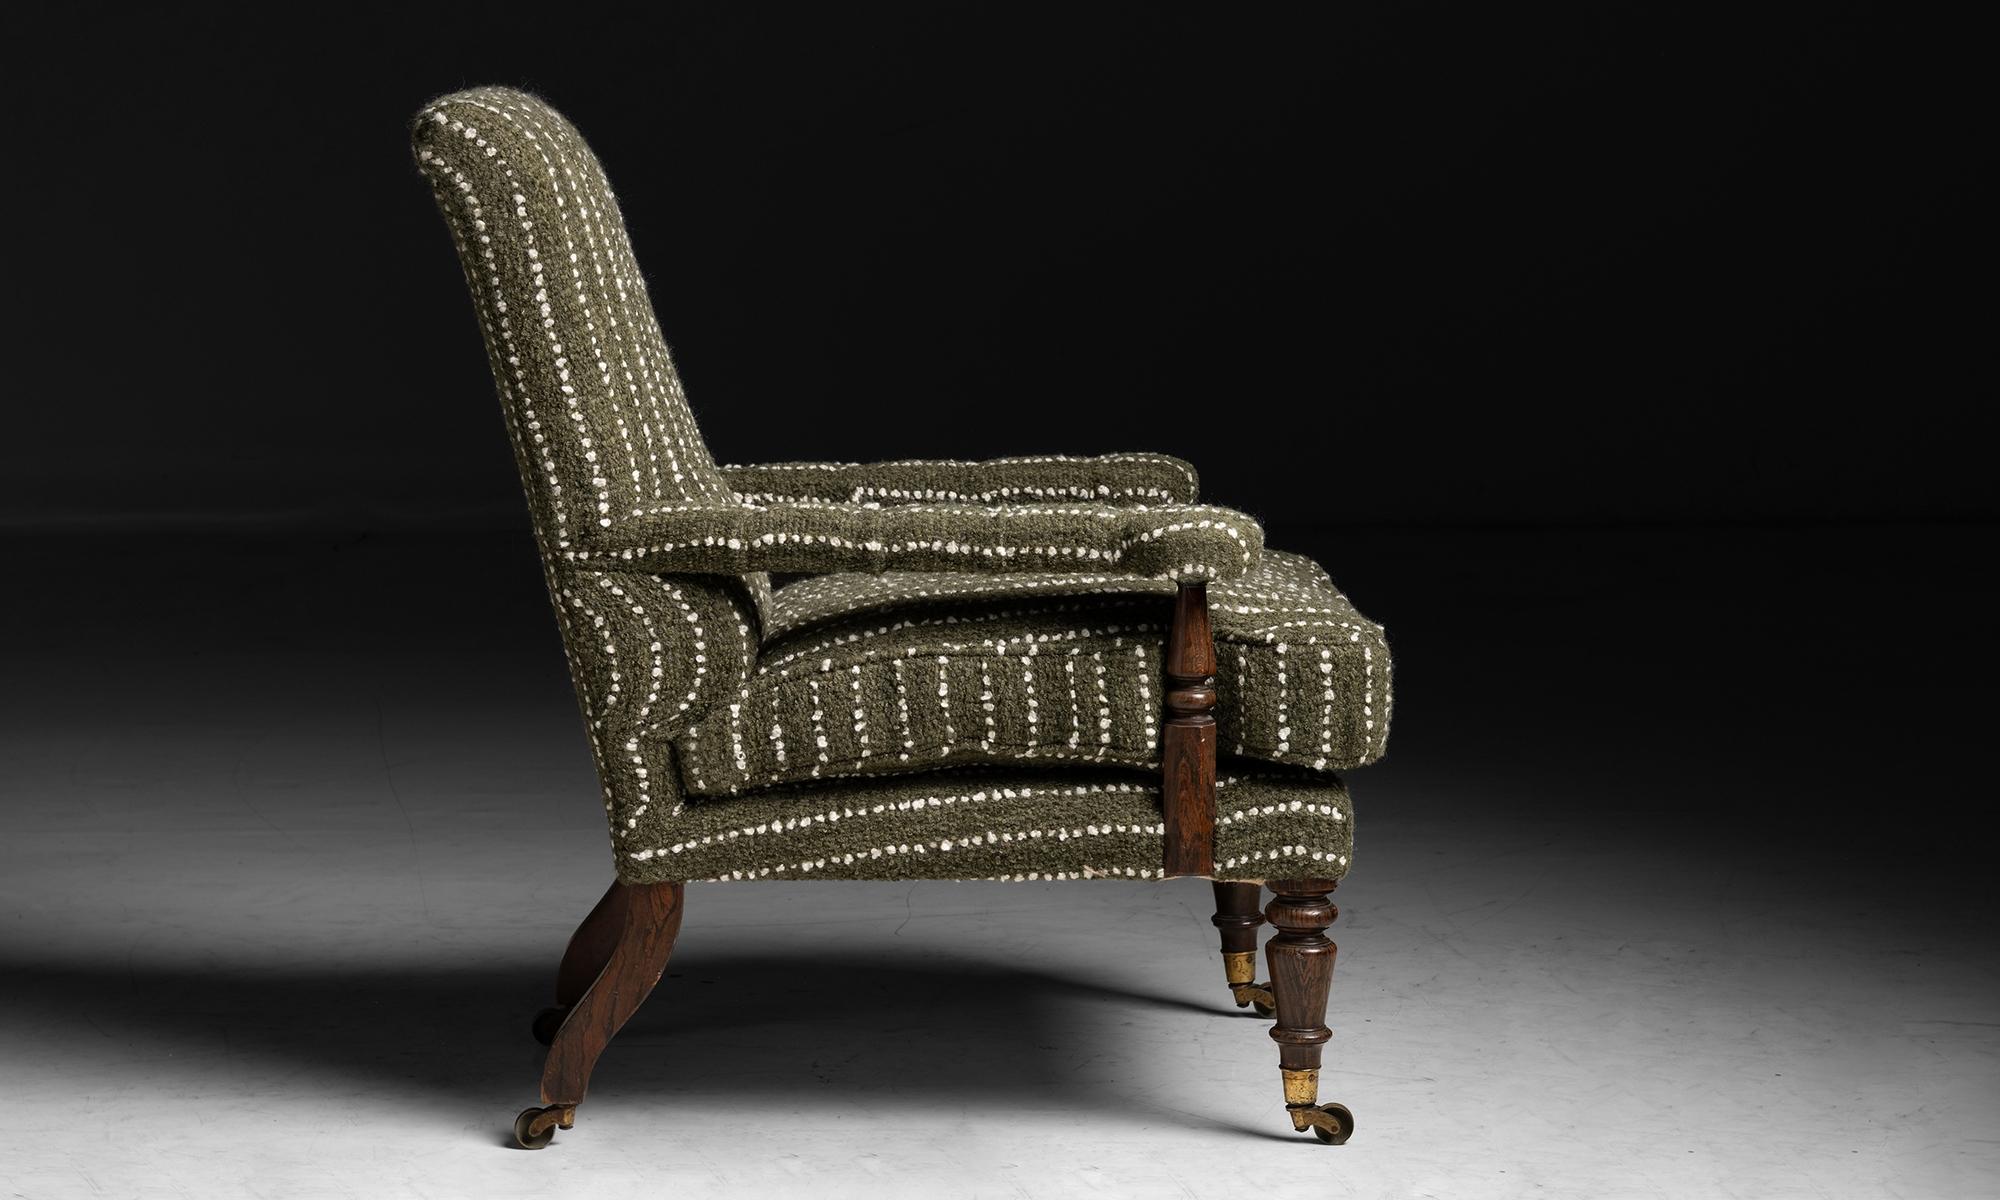 Victorian Miles & Edwards Armchair in Rosemary Hallgarten Fabric Circa 1840